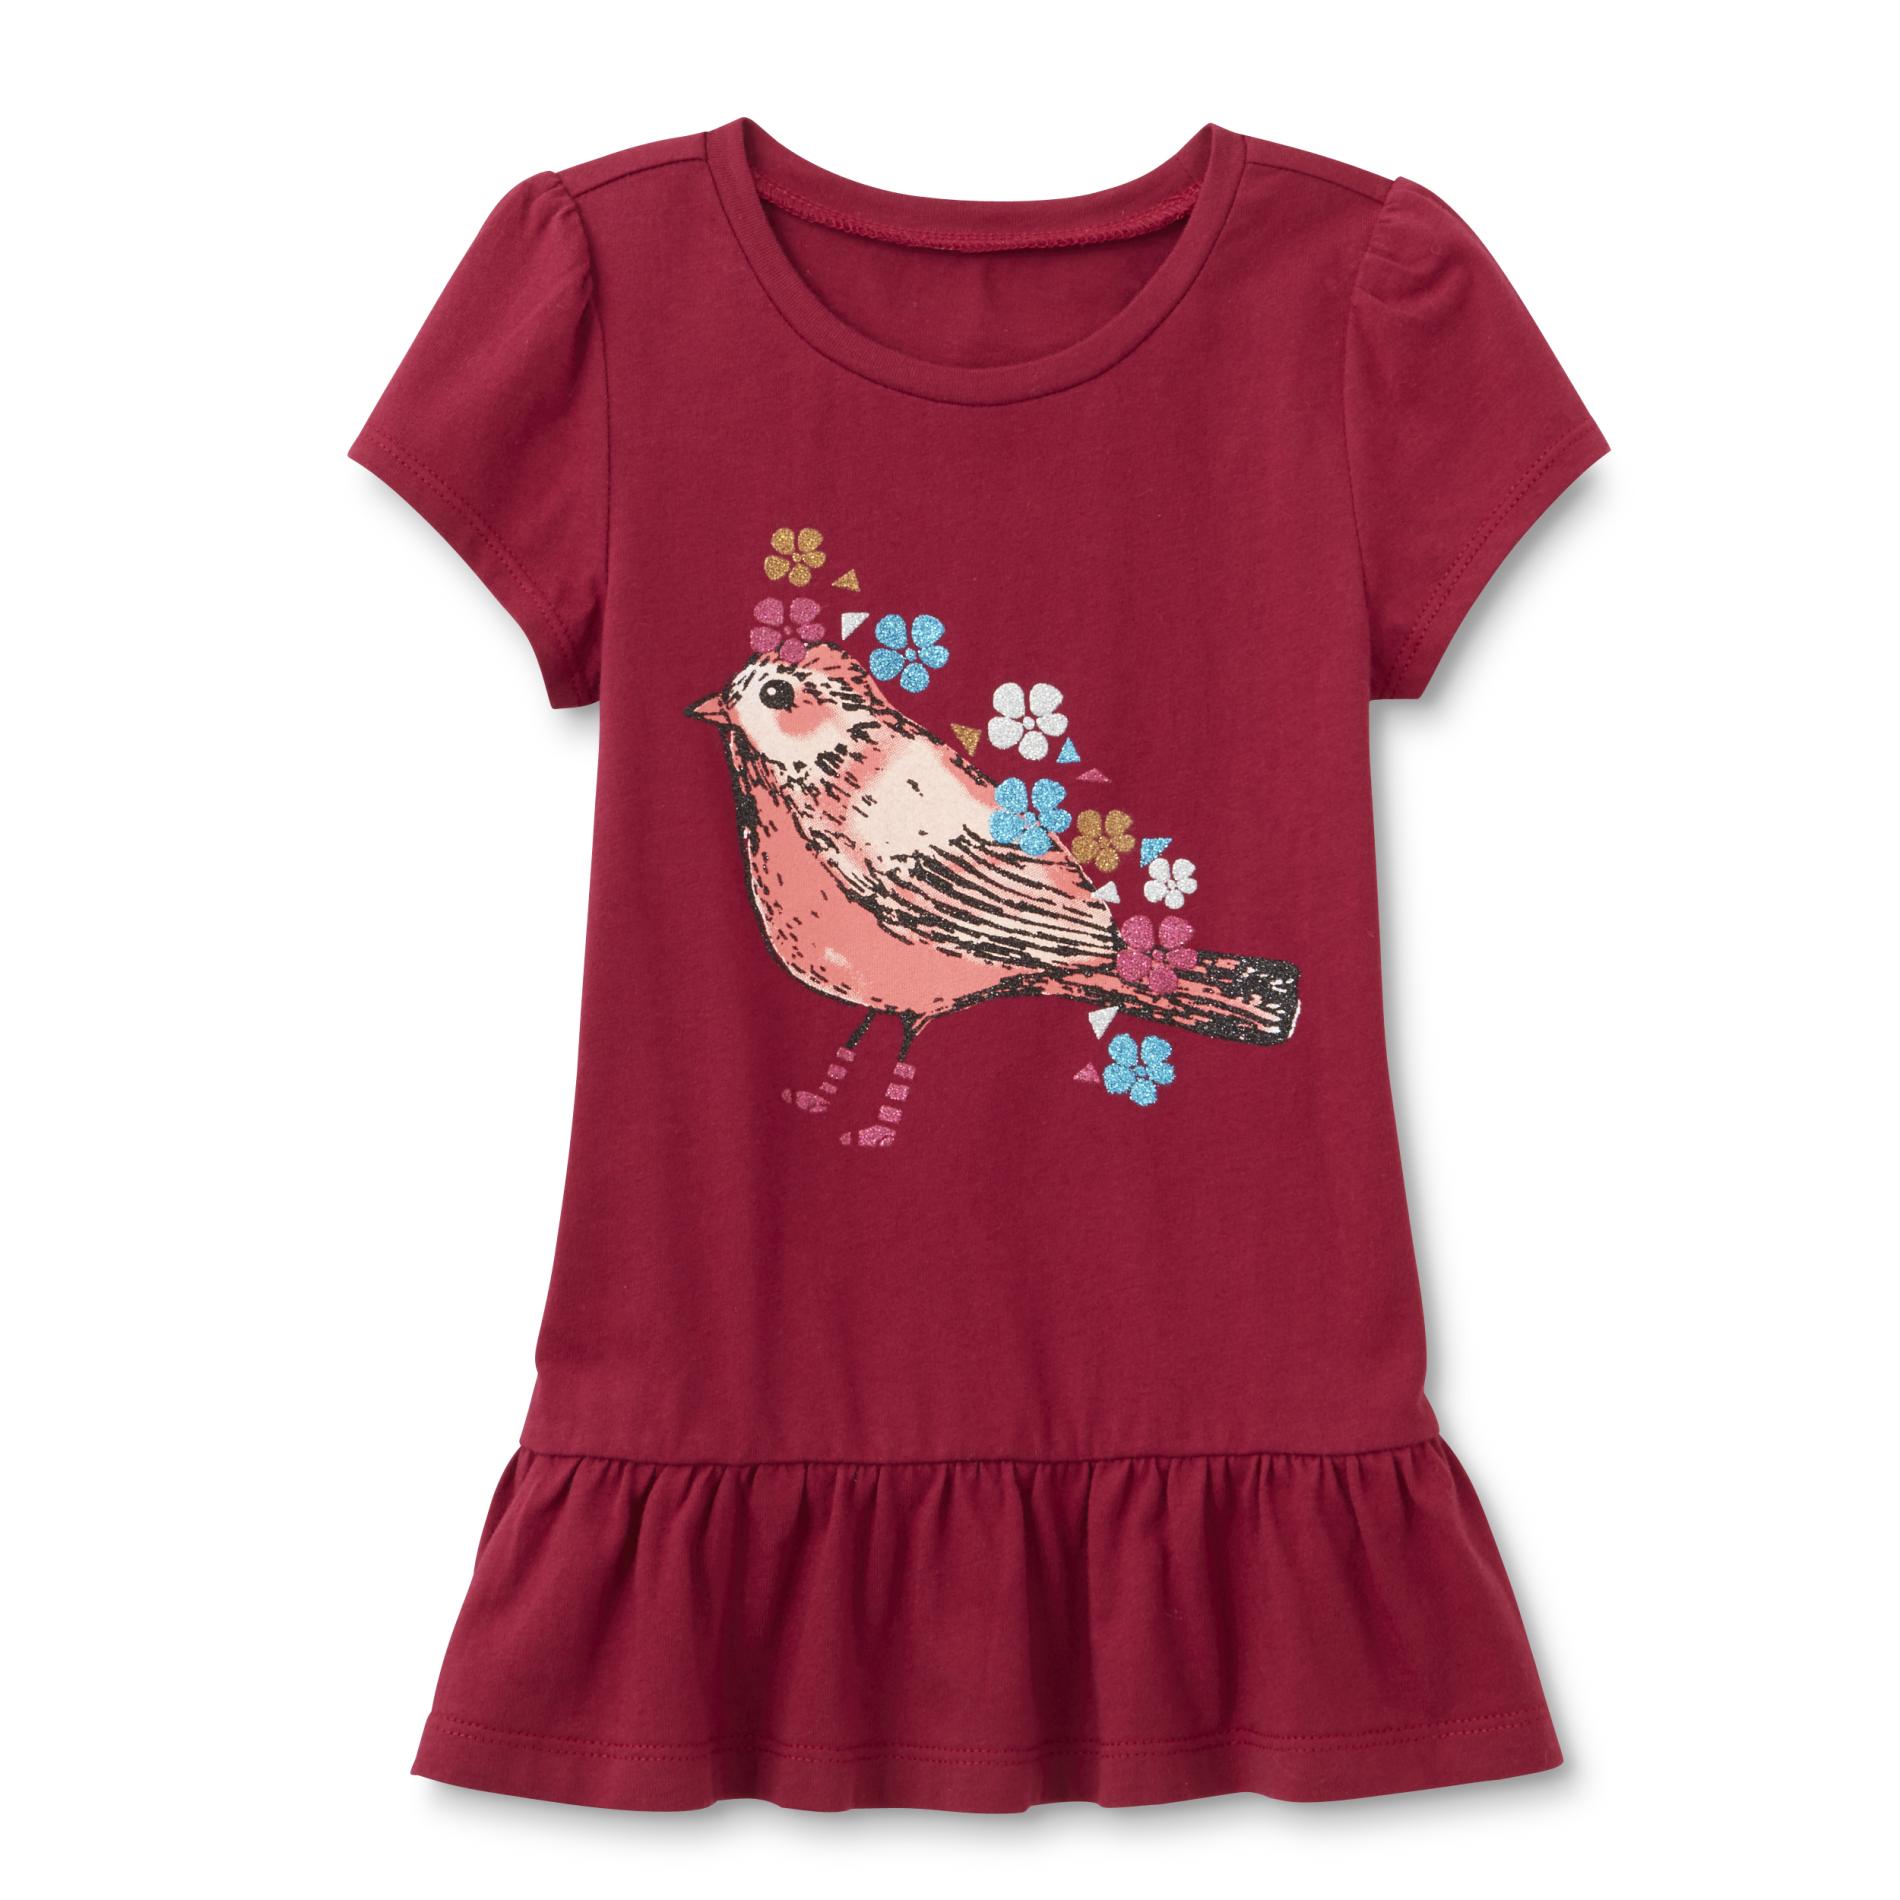 Toughskins Infant & Toddler Girl's Graphic T-Shirt - Bird